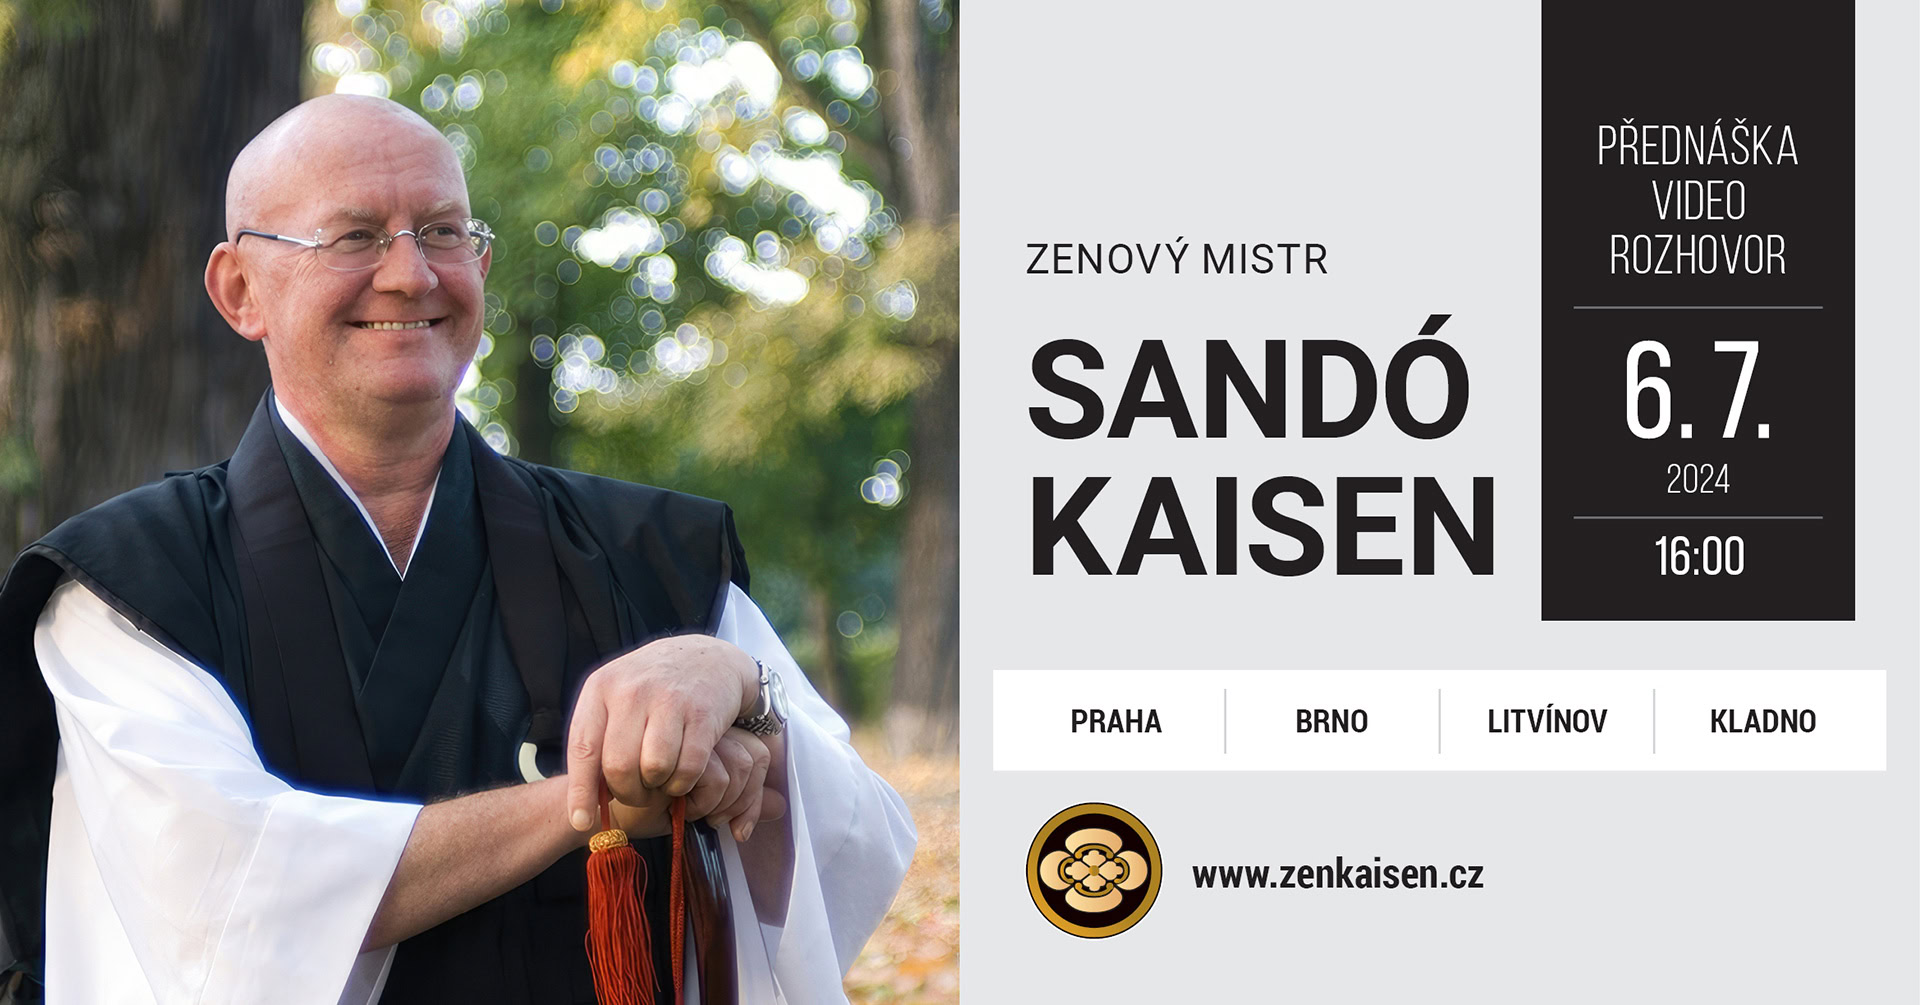 Přednáška video rozhovor Sandó Kaisen